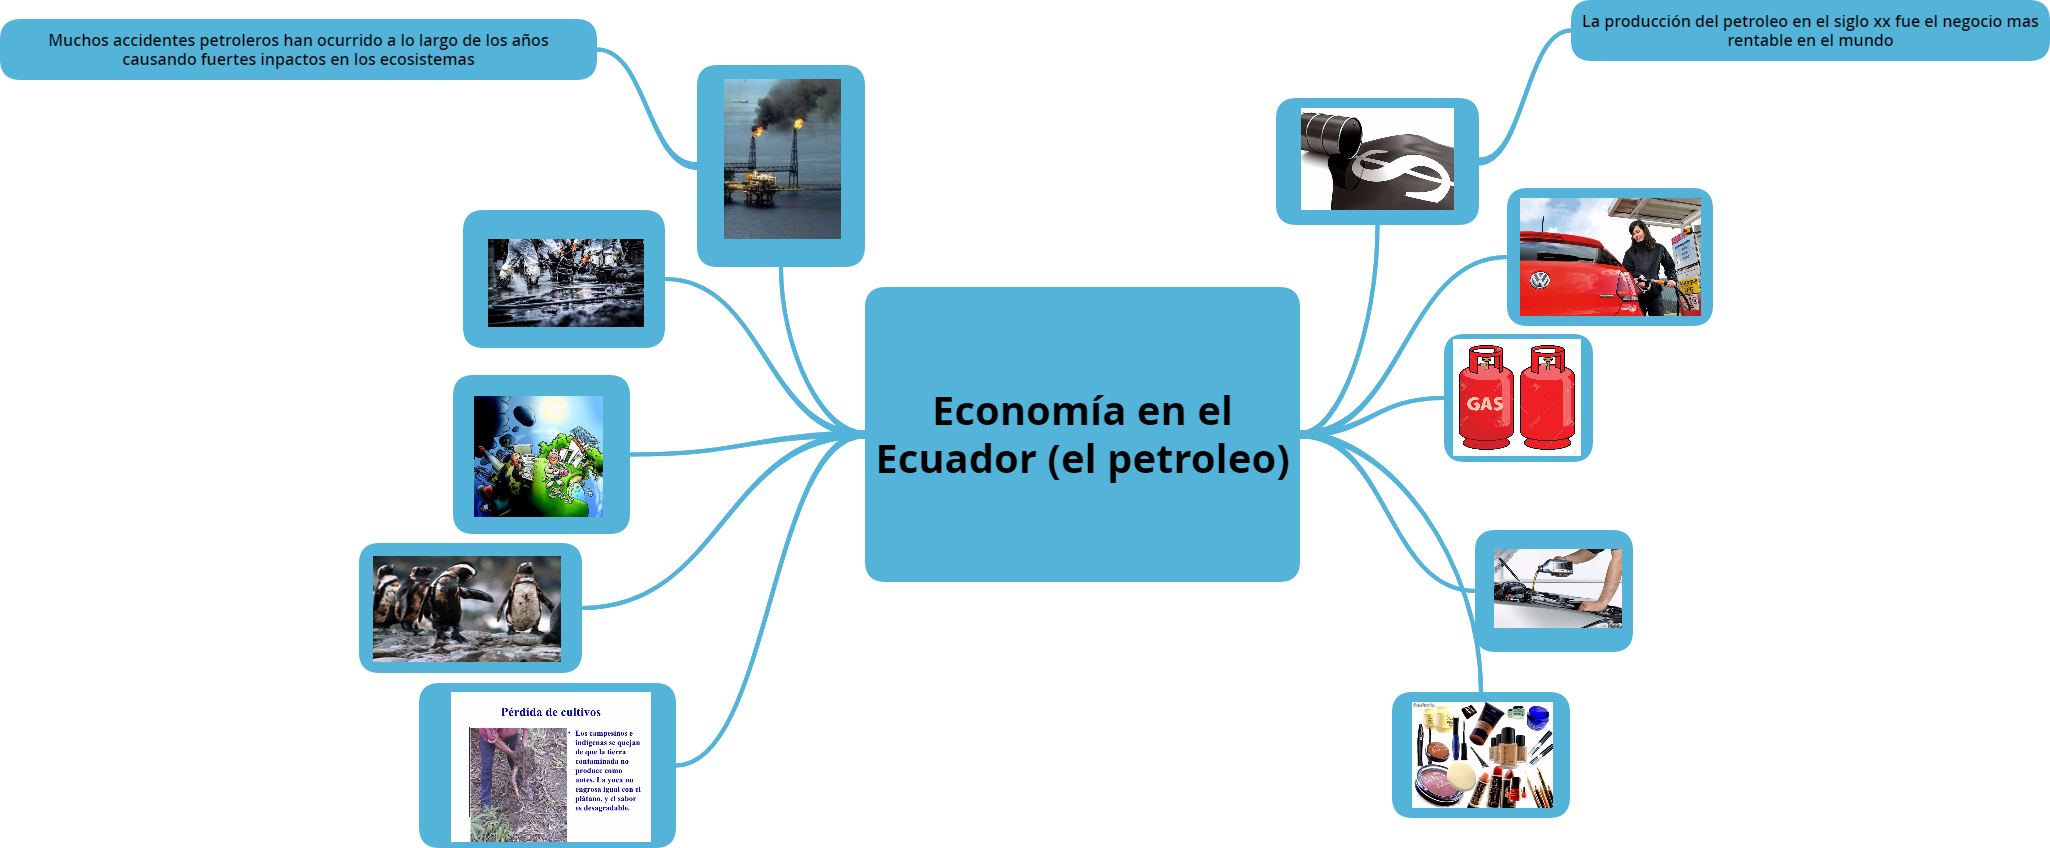 Attachment Economía en el Ecuador (el petroleo).png